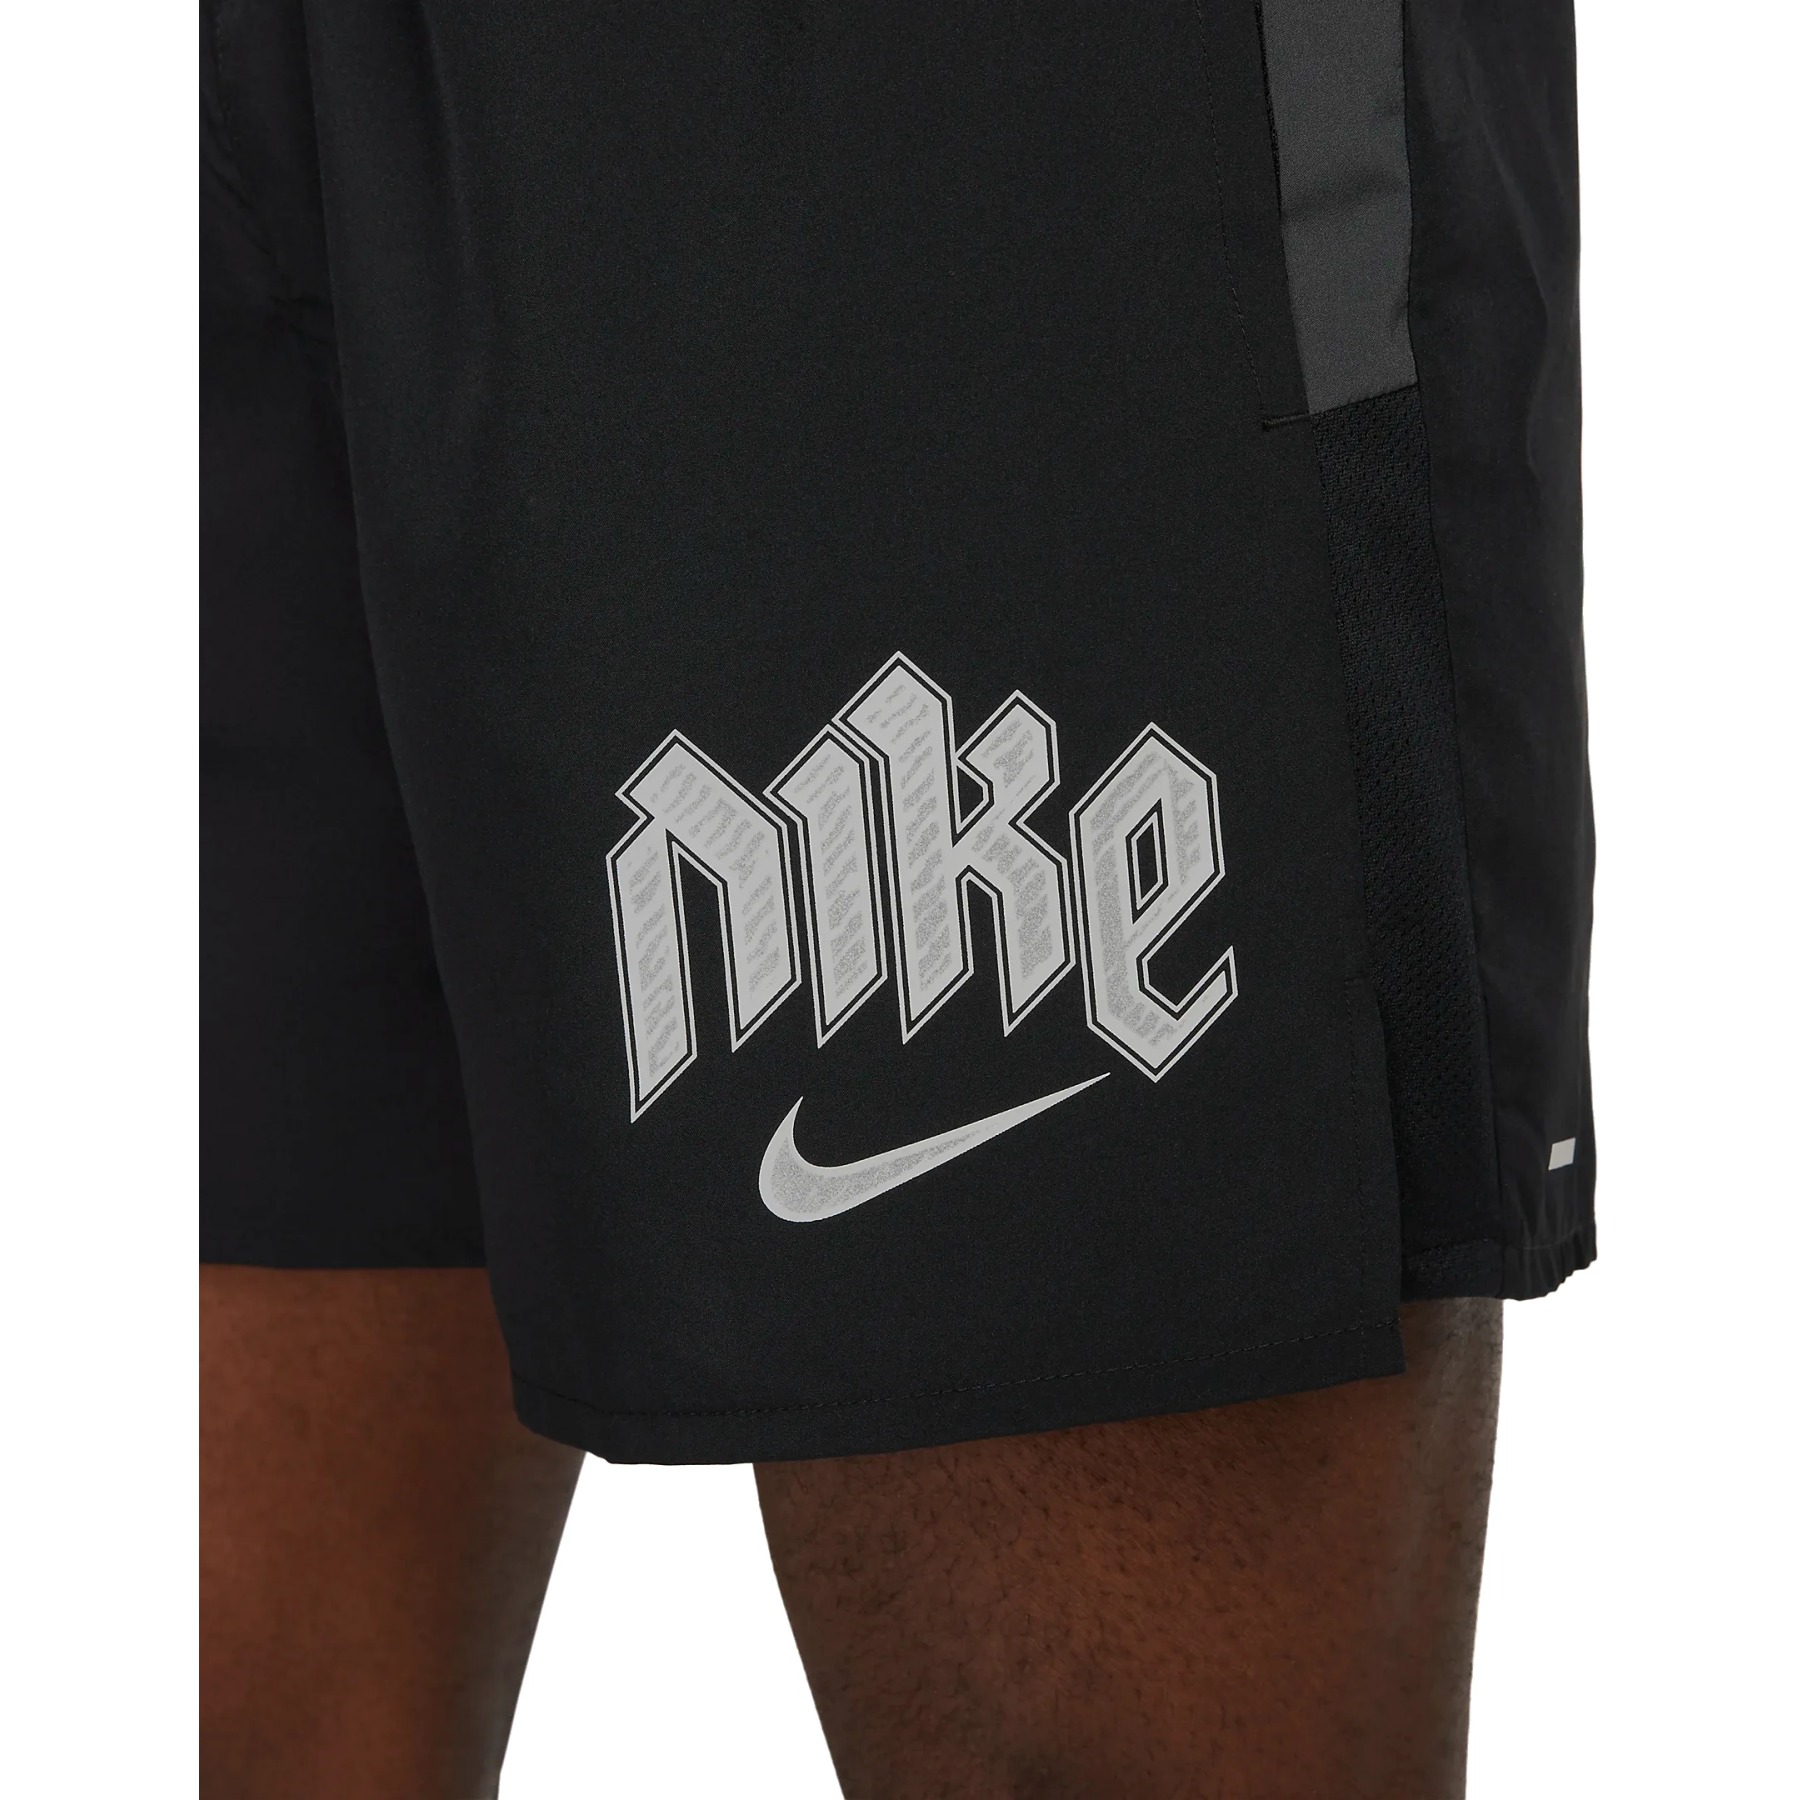 NIKE Men's Dry Training Shorts, Anthracite/Anthracite/Black, X